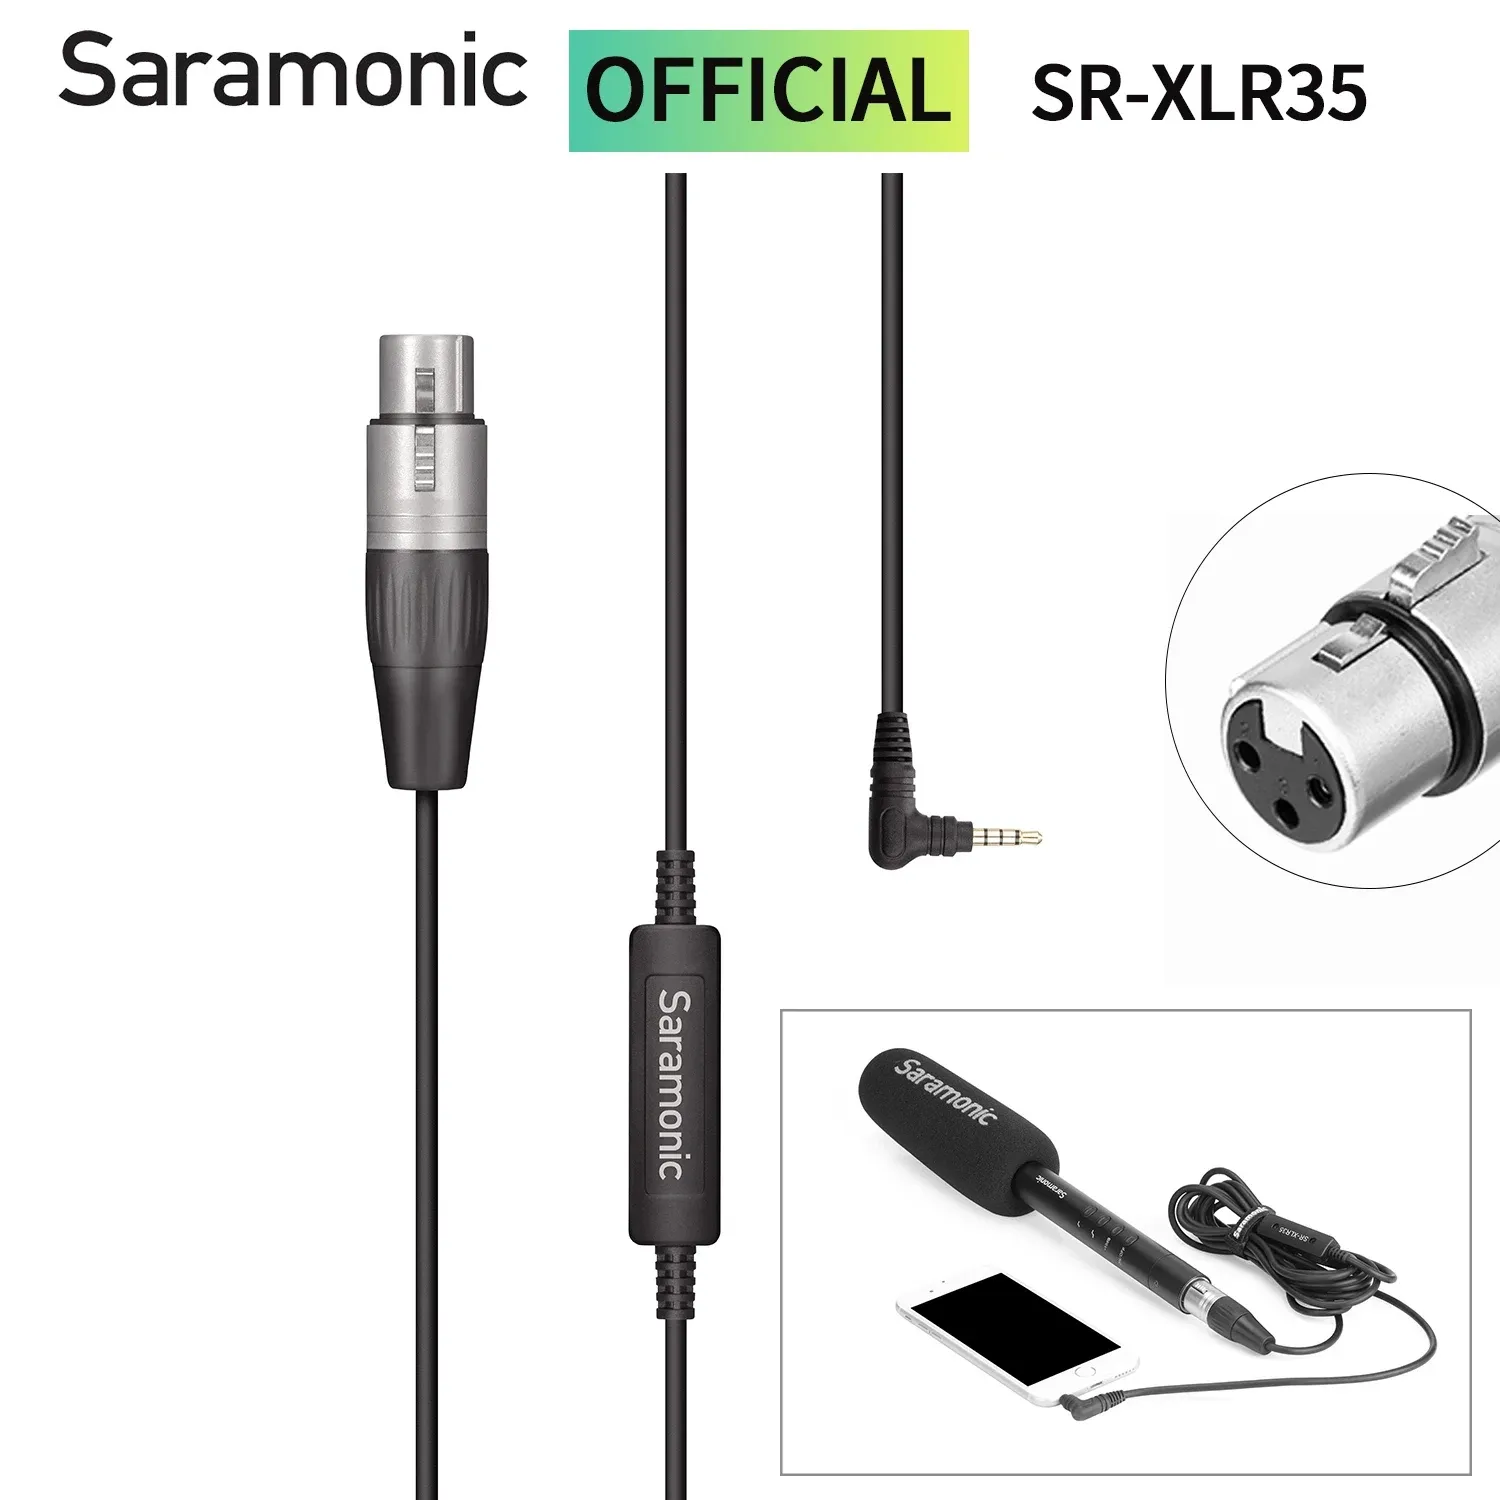 Adattatore Saramonic Srxlr35 Cavo adattatore da 3,5 mm Trrs a 3 pin Xlr femmina Jack per microfono wireless Telefono cellulare Smartphone Ipad Ipod